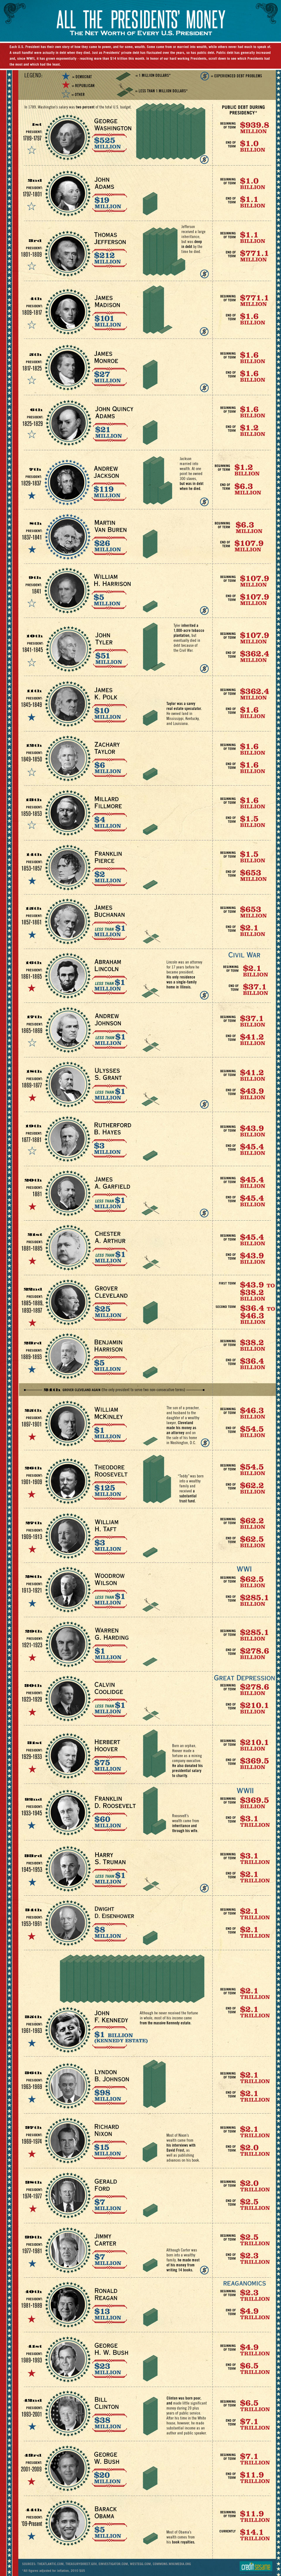 Net Worth of US Presidents from Washington to Obama